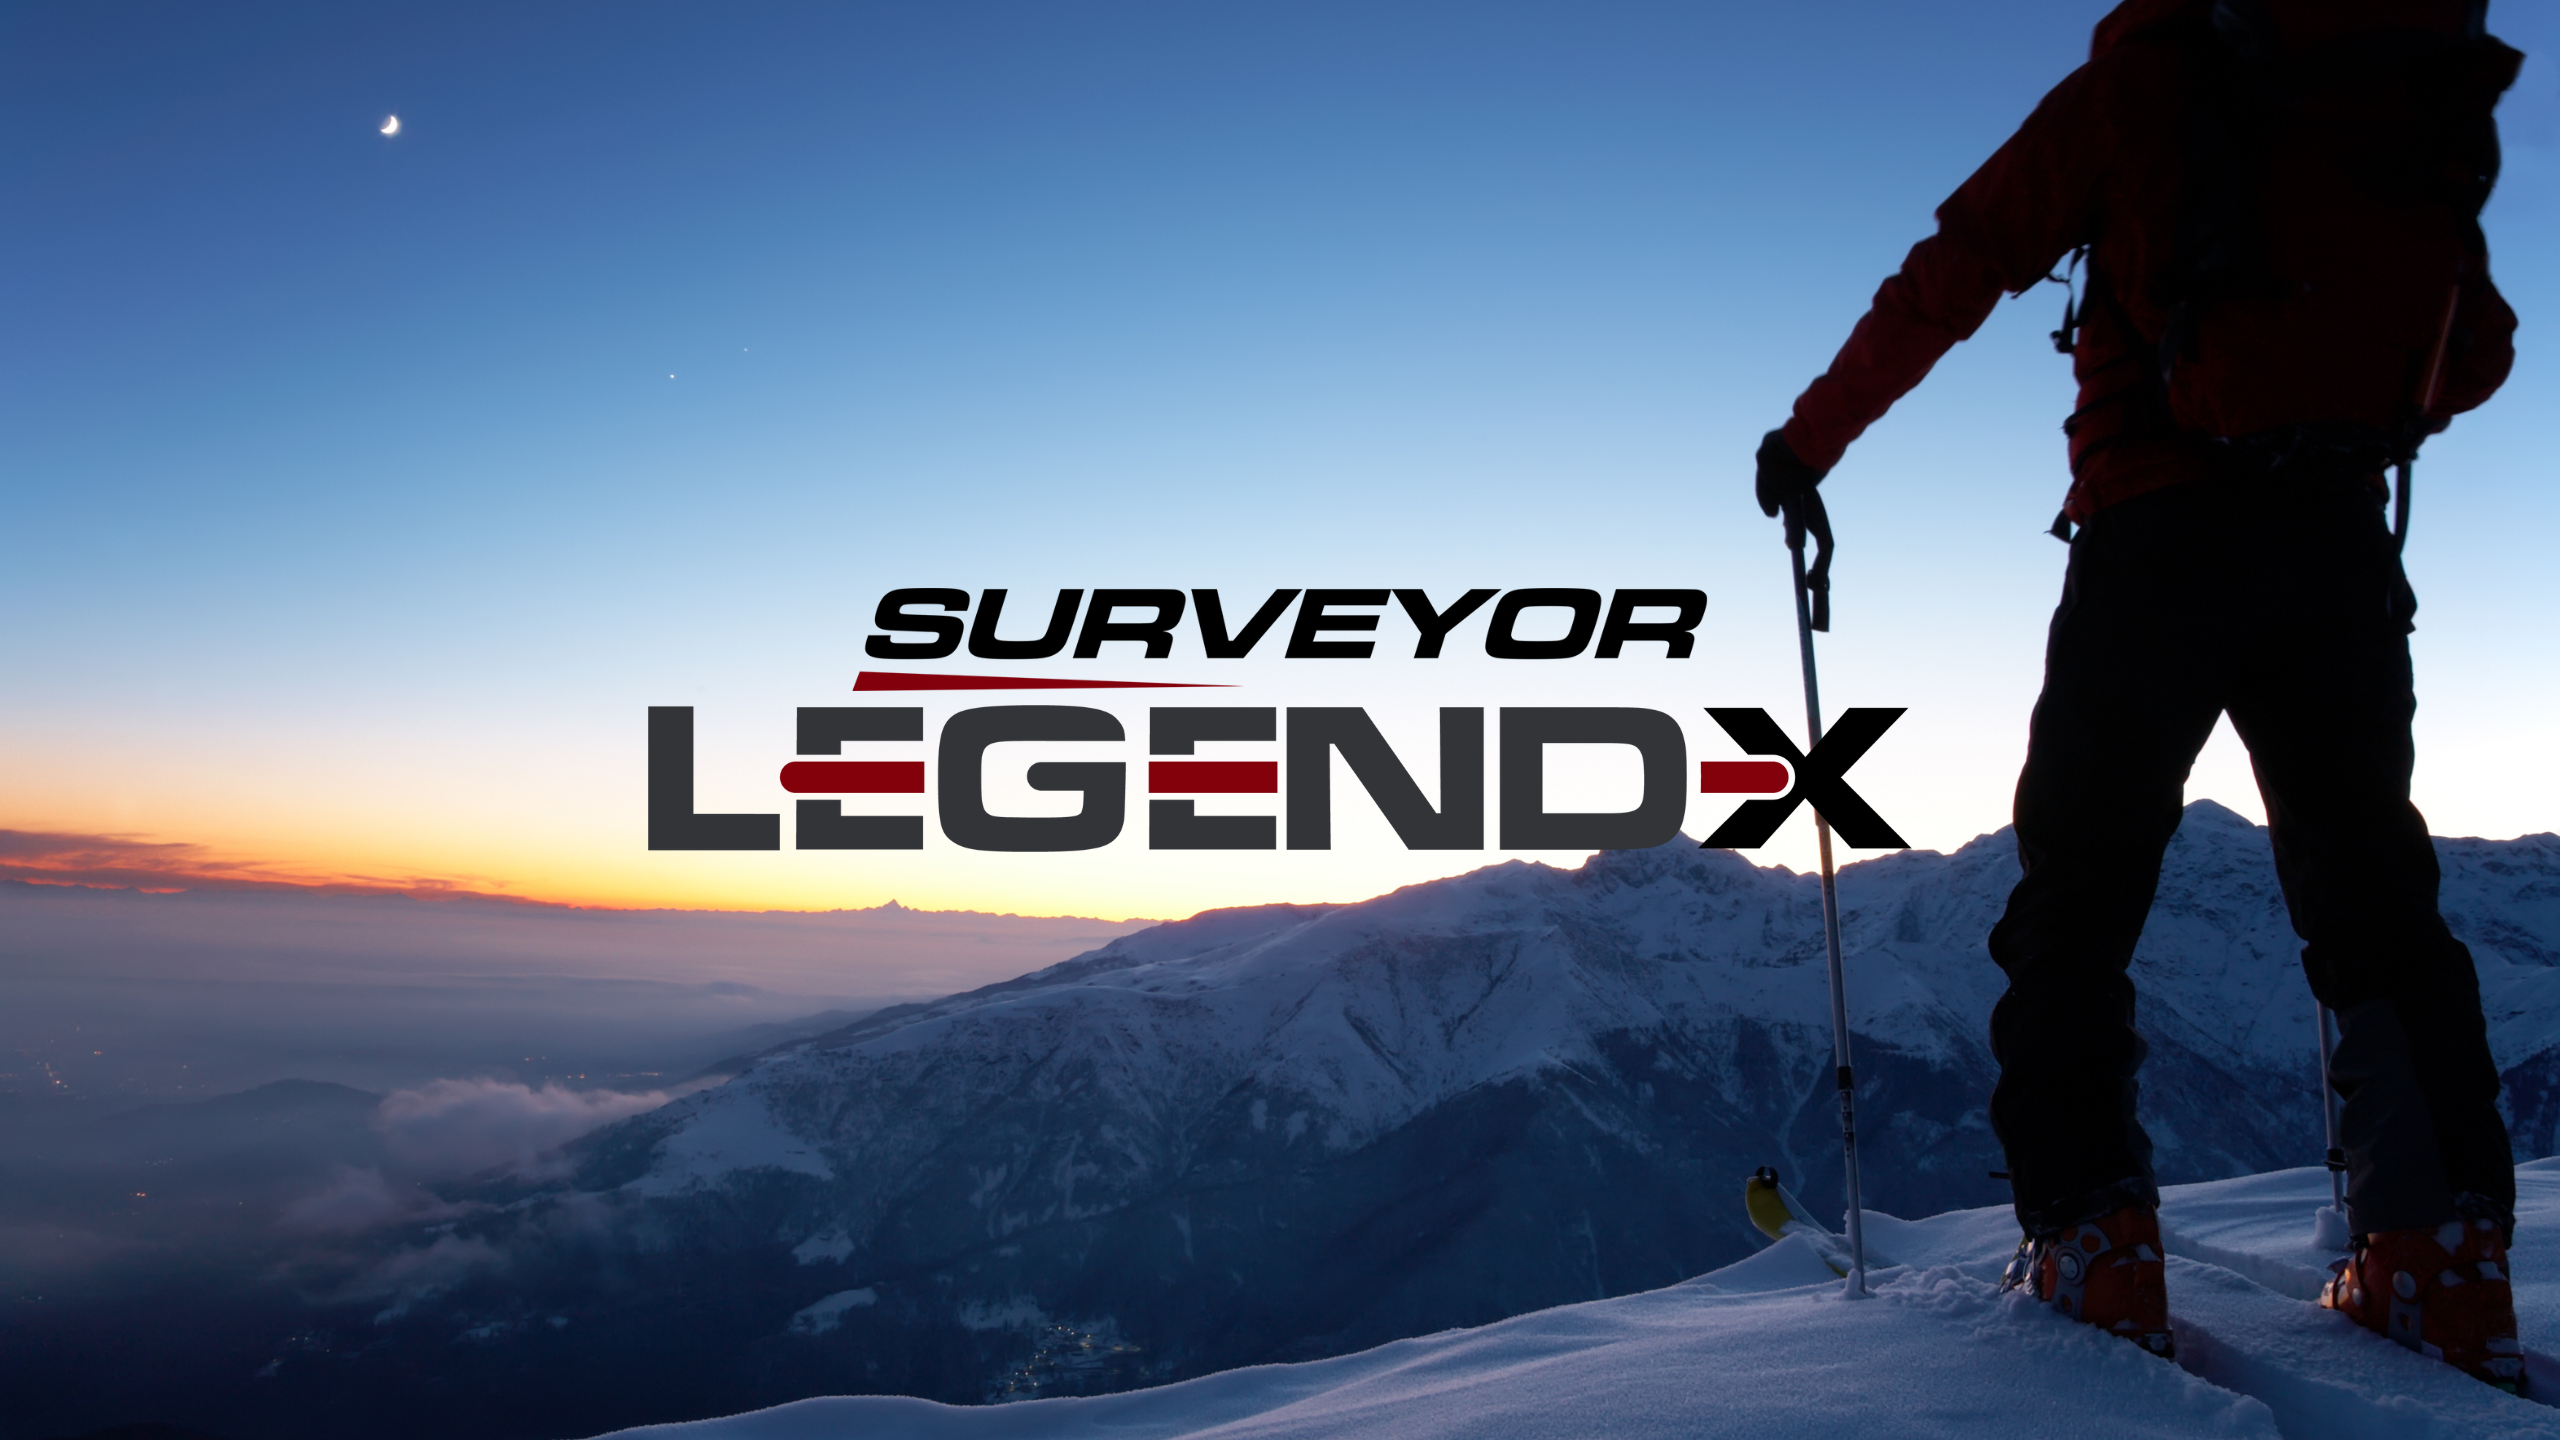 Surveyor Legend X RVs